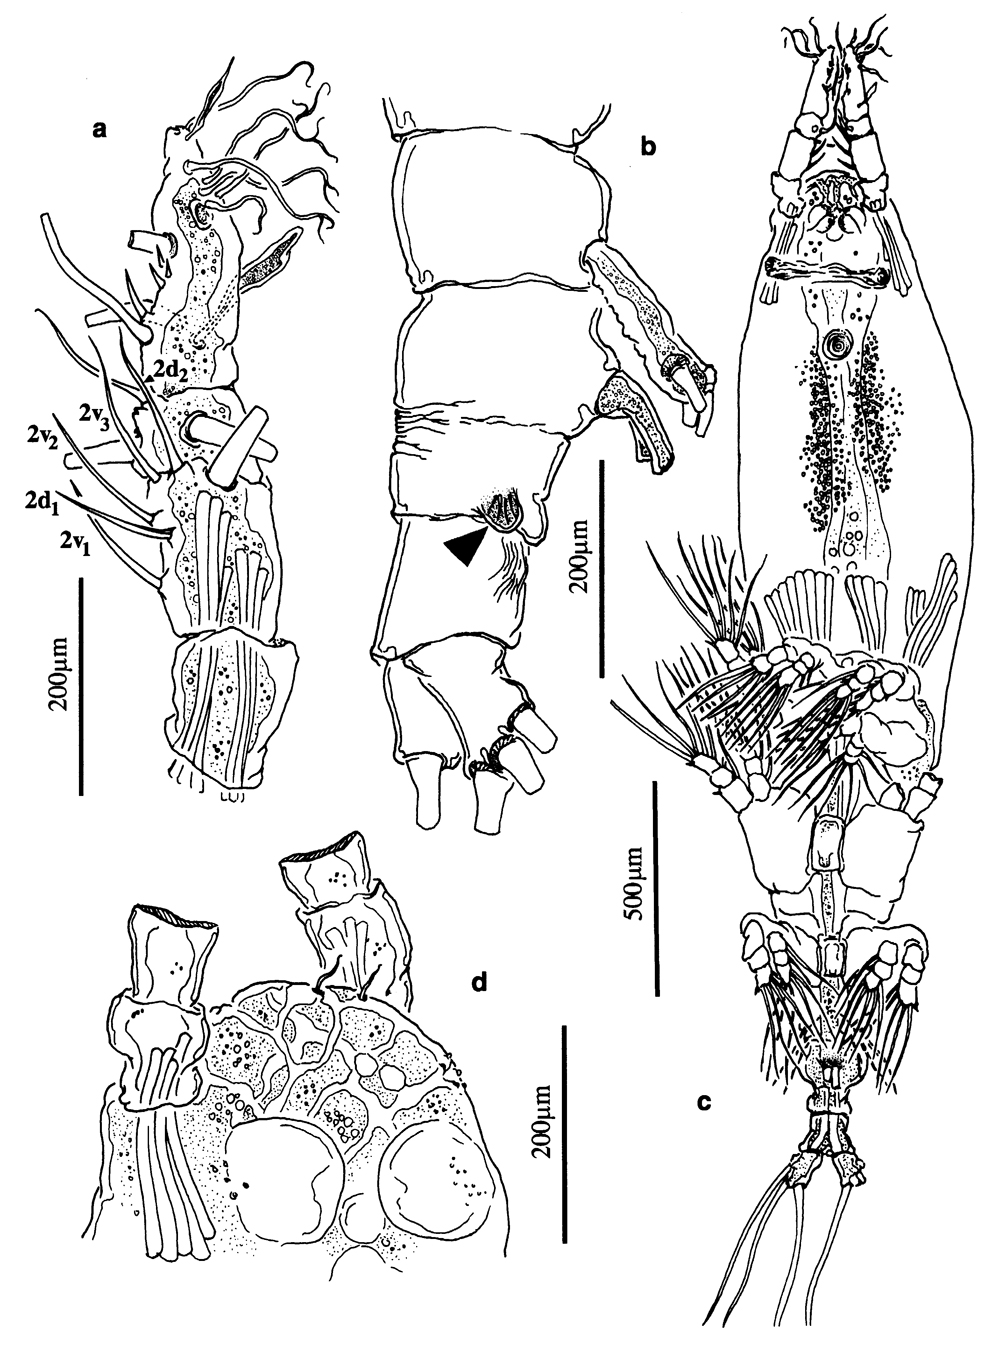 Species Cymbasoma germanicum - Plate 2 of morphological figures